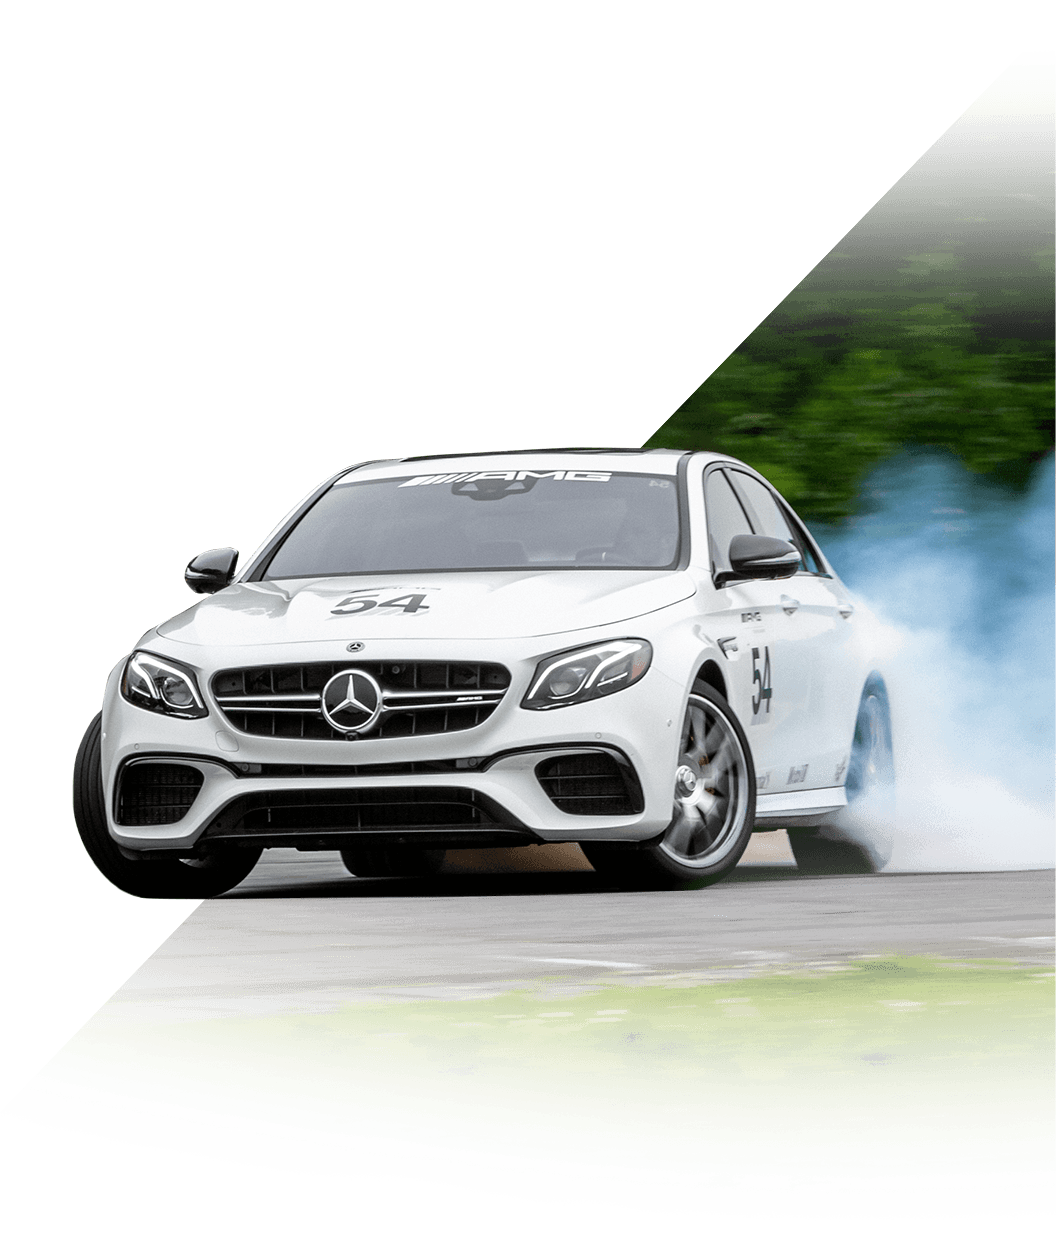 White Mercedes-AMG Vehicle Name drifting